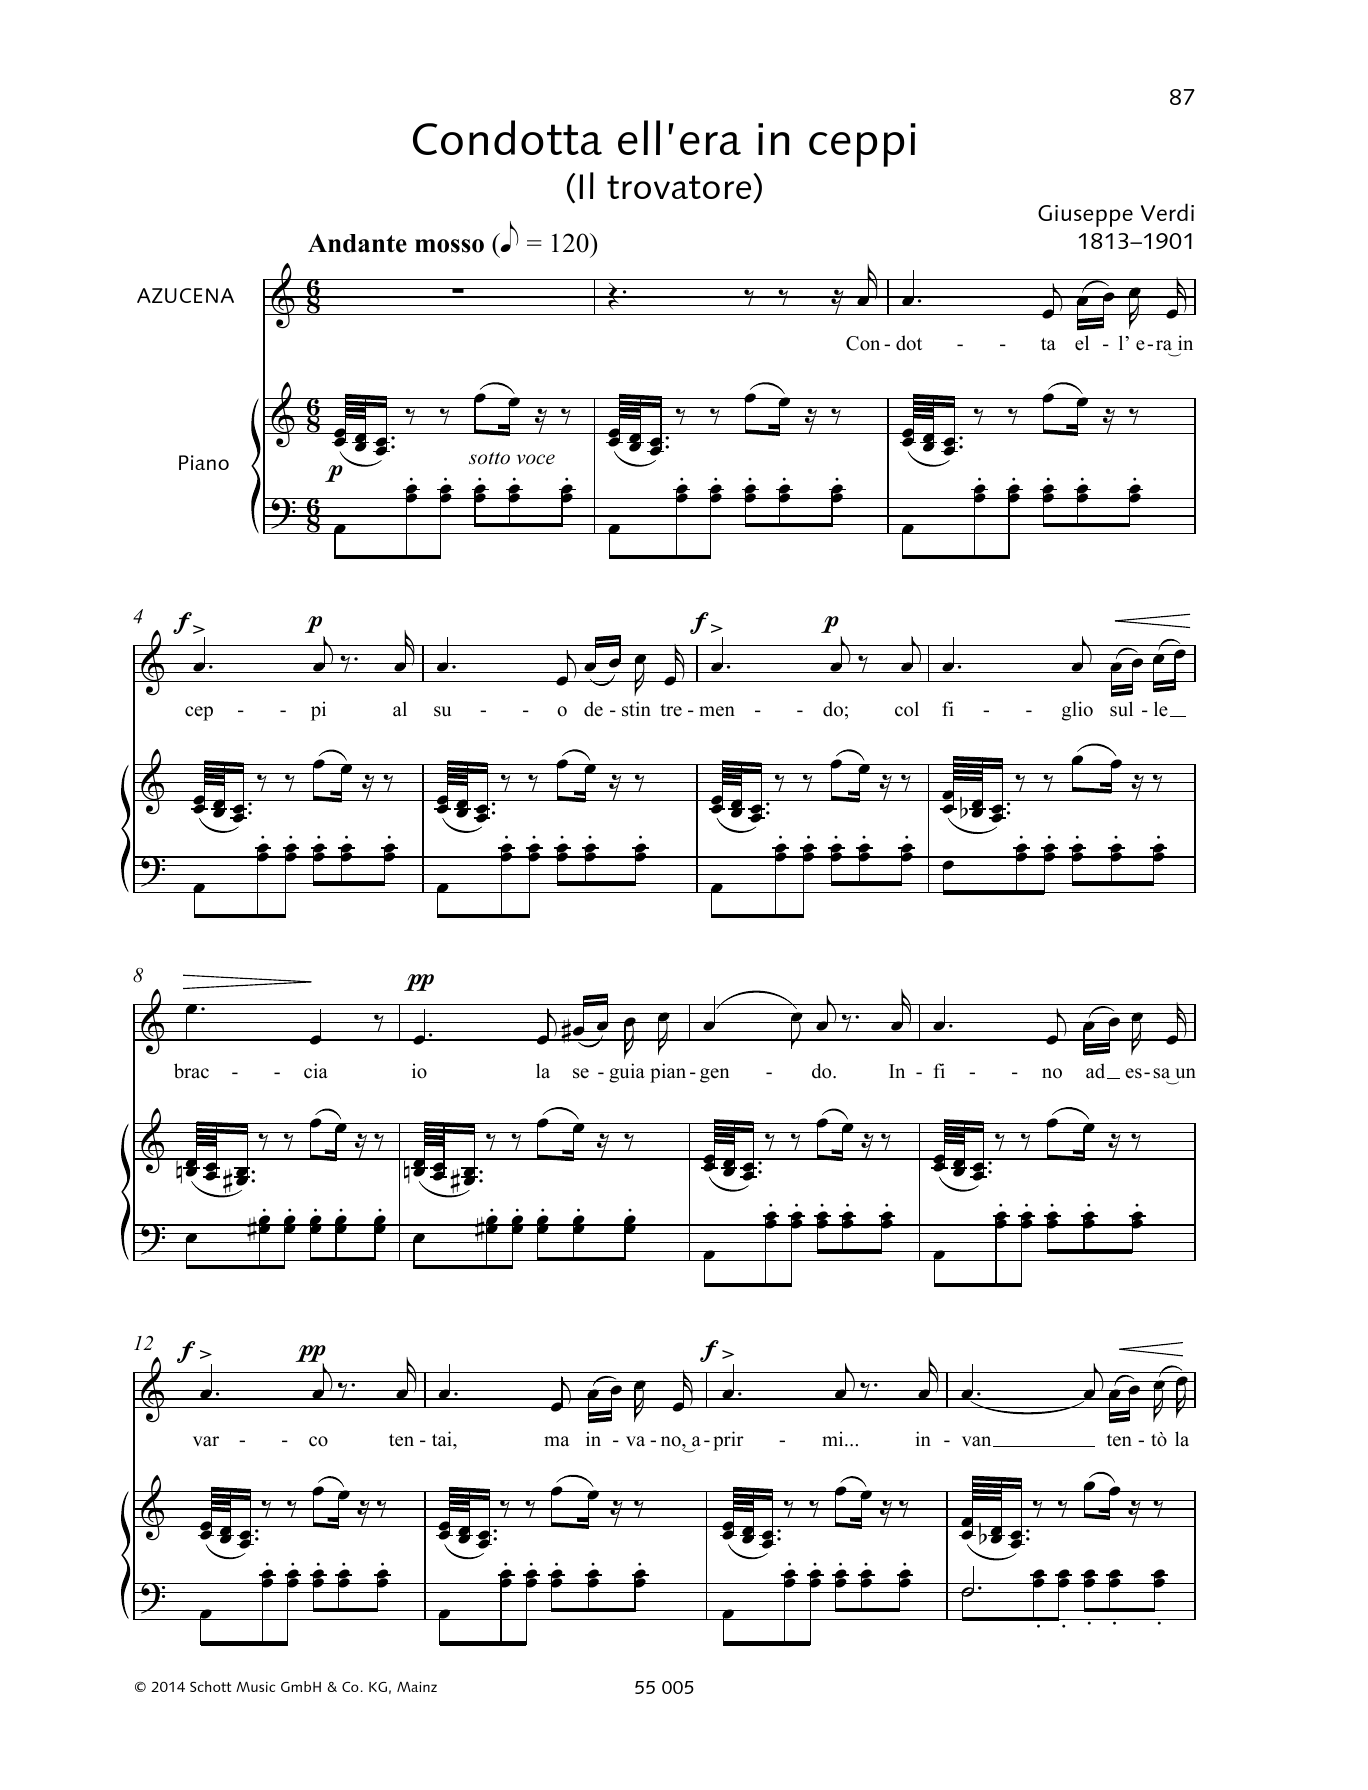 Download Giuseppe Verdi Condotta ell'era in ceppi Sheet Music